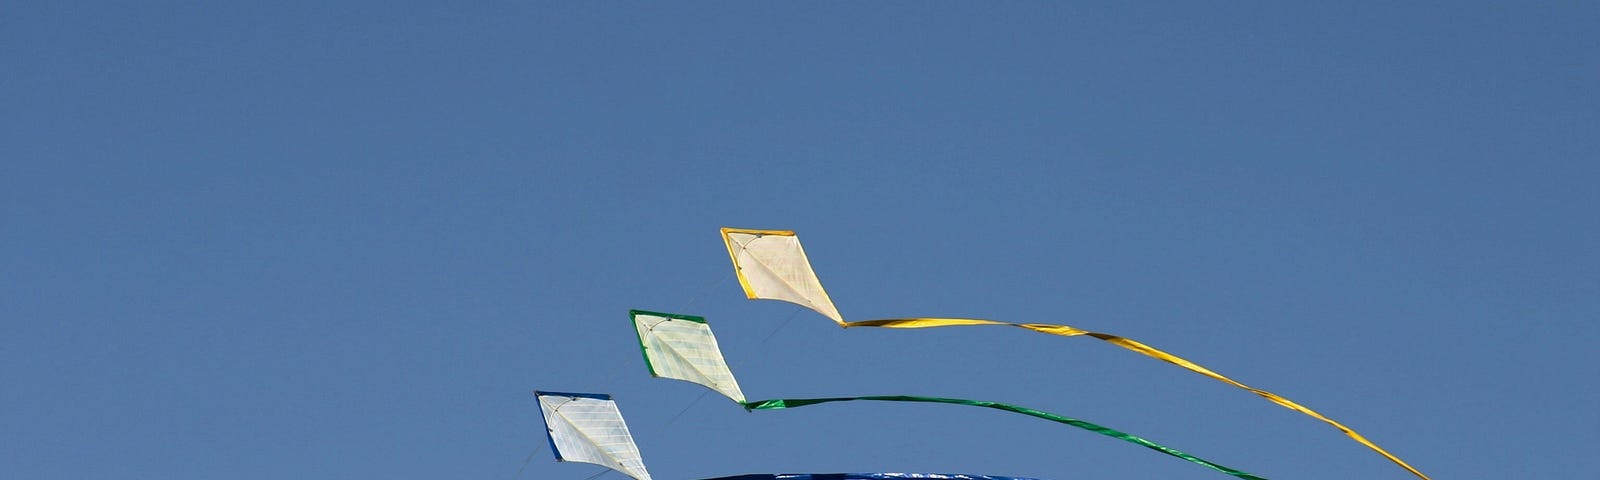 Three kites in a clear blue sky